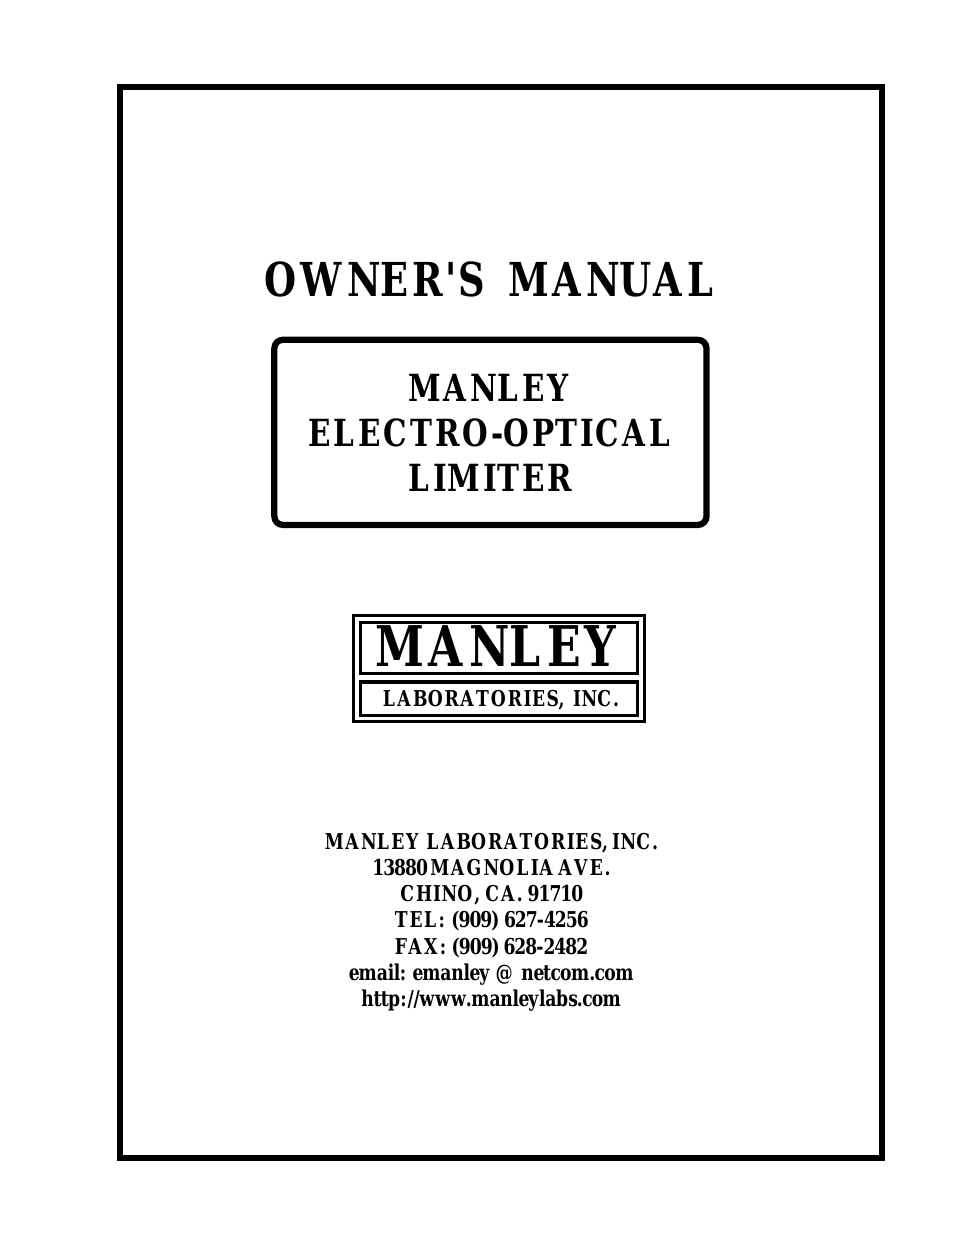 ELECTRO-OPTICAL LIMITER - 1994 - 1997 MANELOP020-318